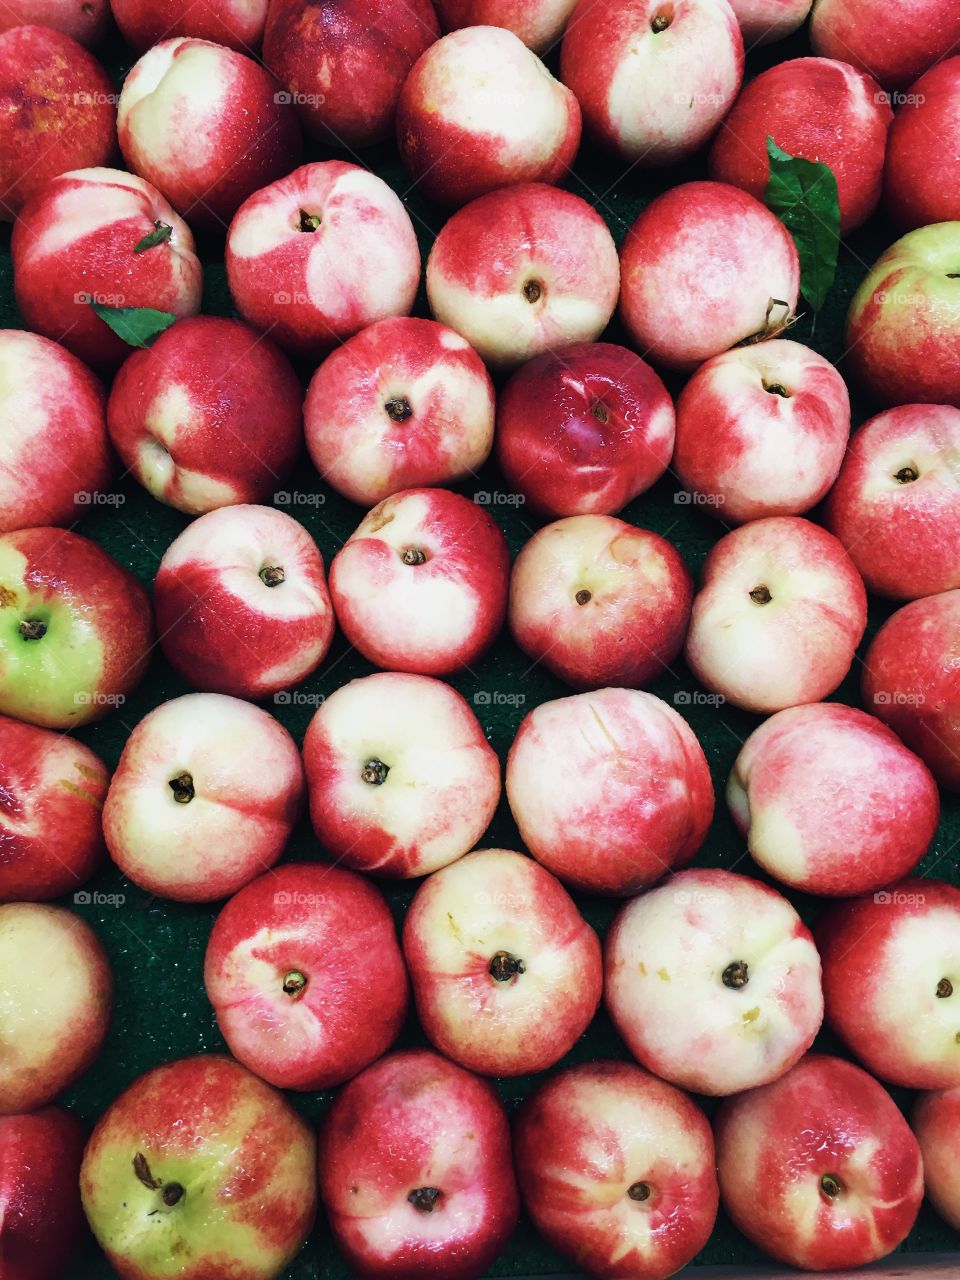 Fresh farm market apples